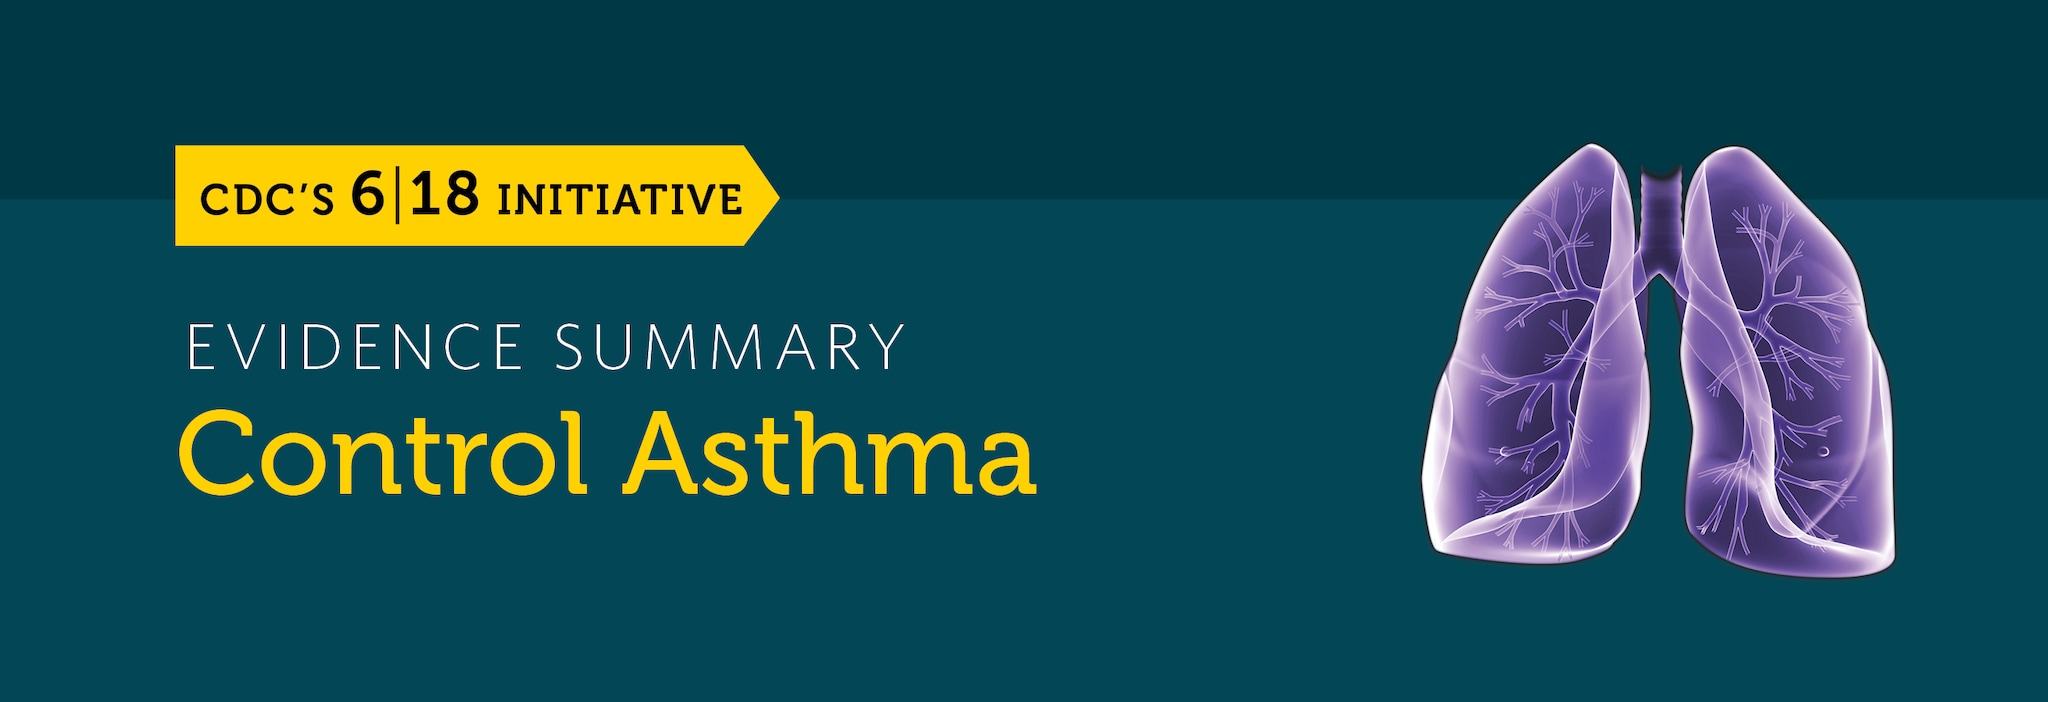 The control asthma evidence summary banner.